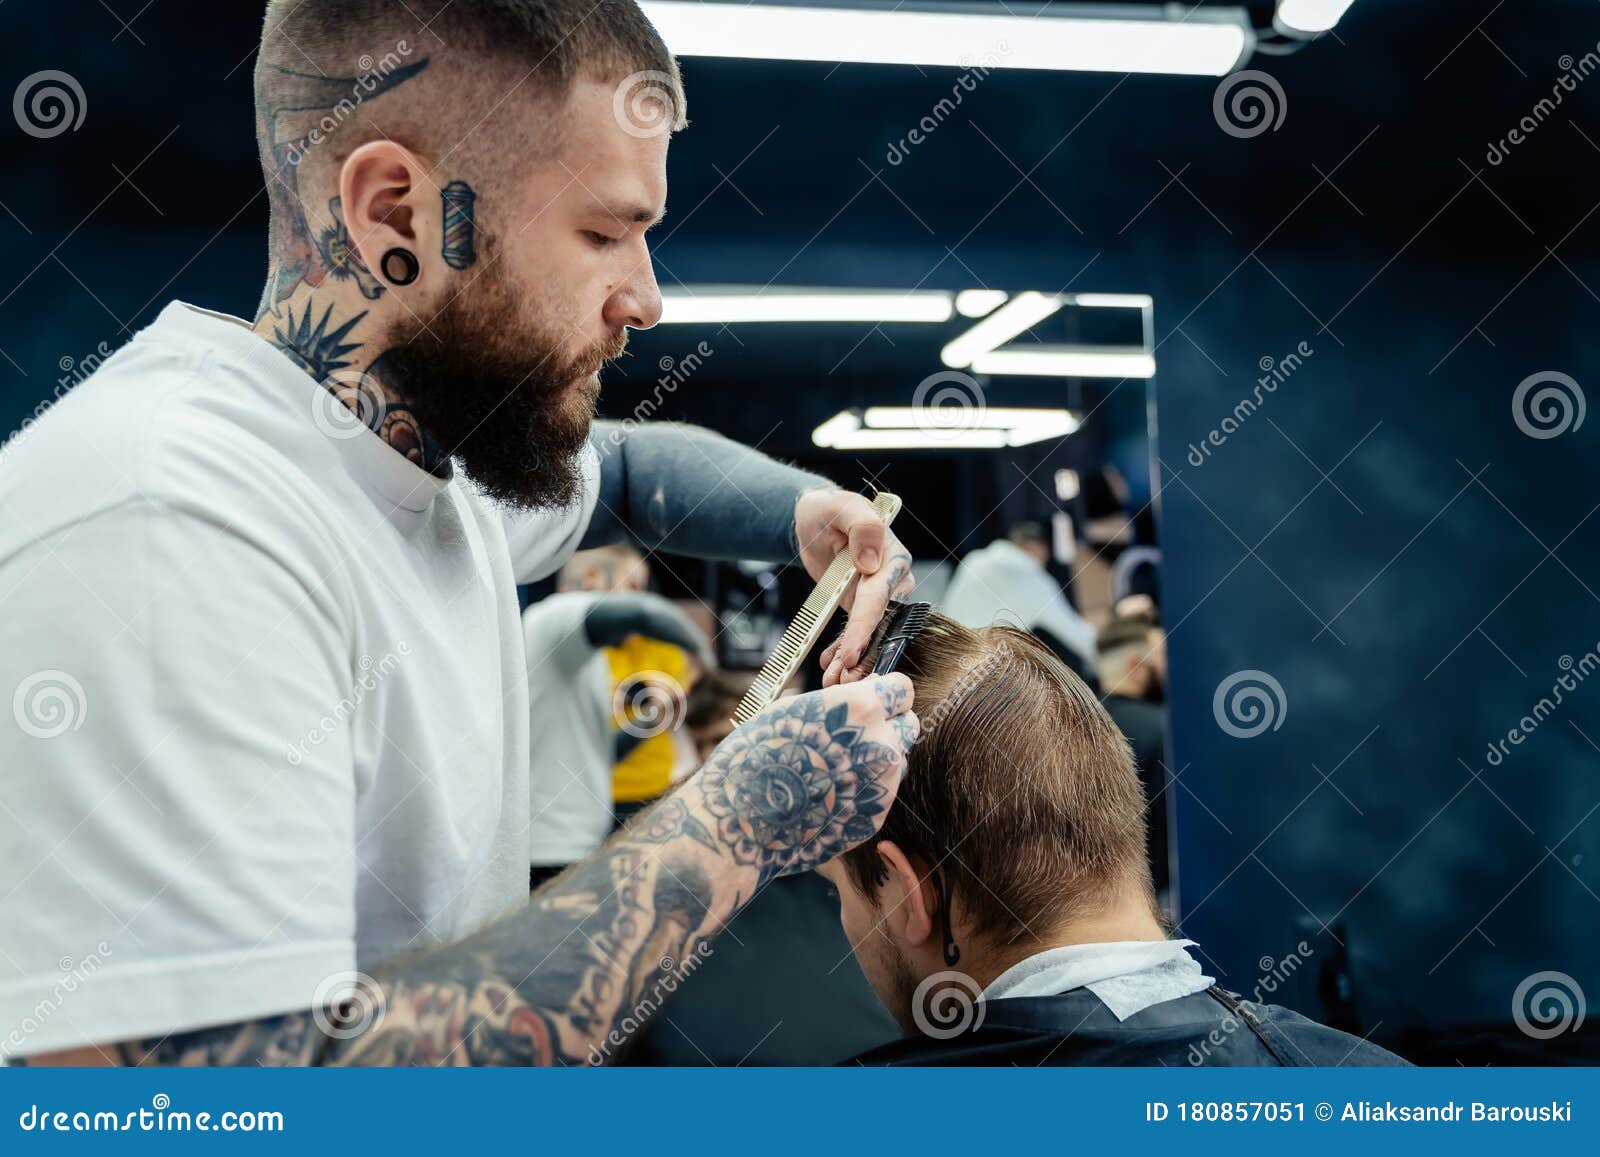 Hair Tattoo: Barber Shop & Hair Salon Games | Virtual Barber Hair Salon  Beard Shave Games: Hair Cutting Simulator: Beard Styles & Hairdresser Games  | Virtual Hair Tattoo Paint - Salon Simulator:Amazon.in:Appstore